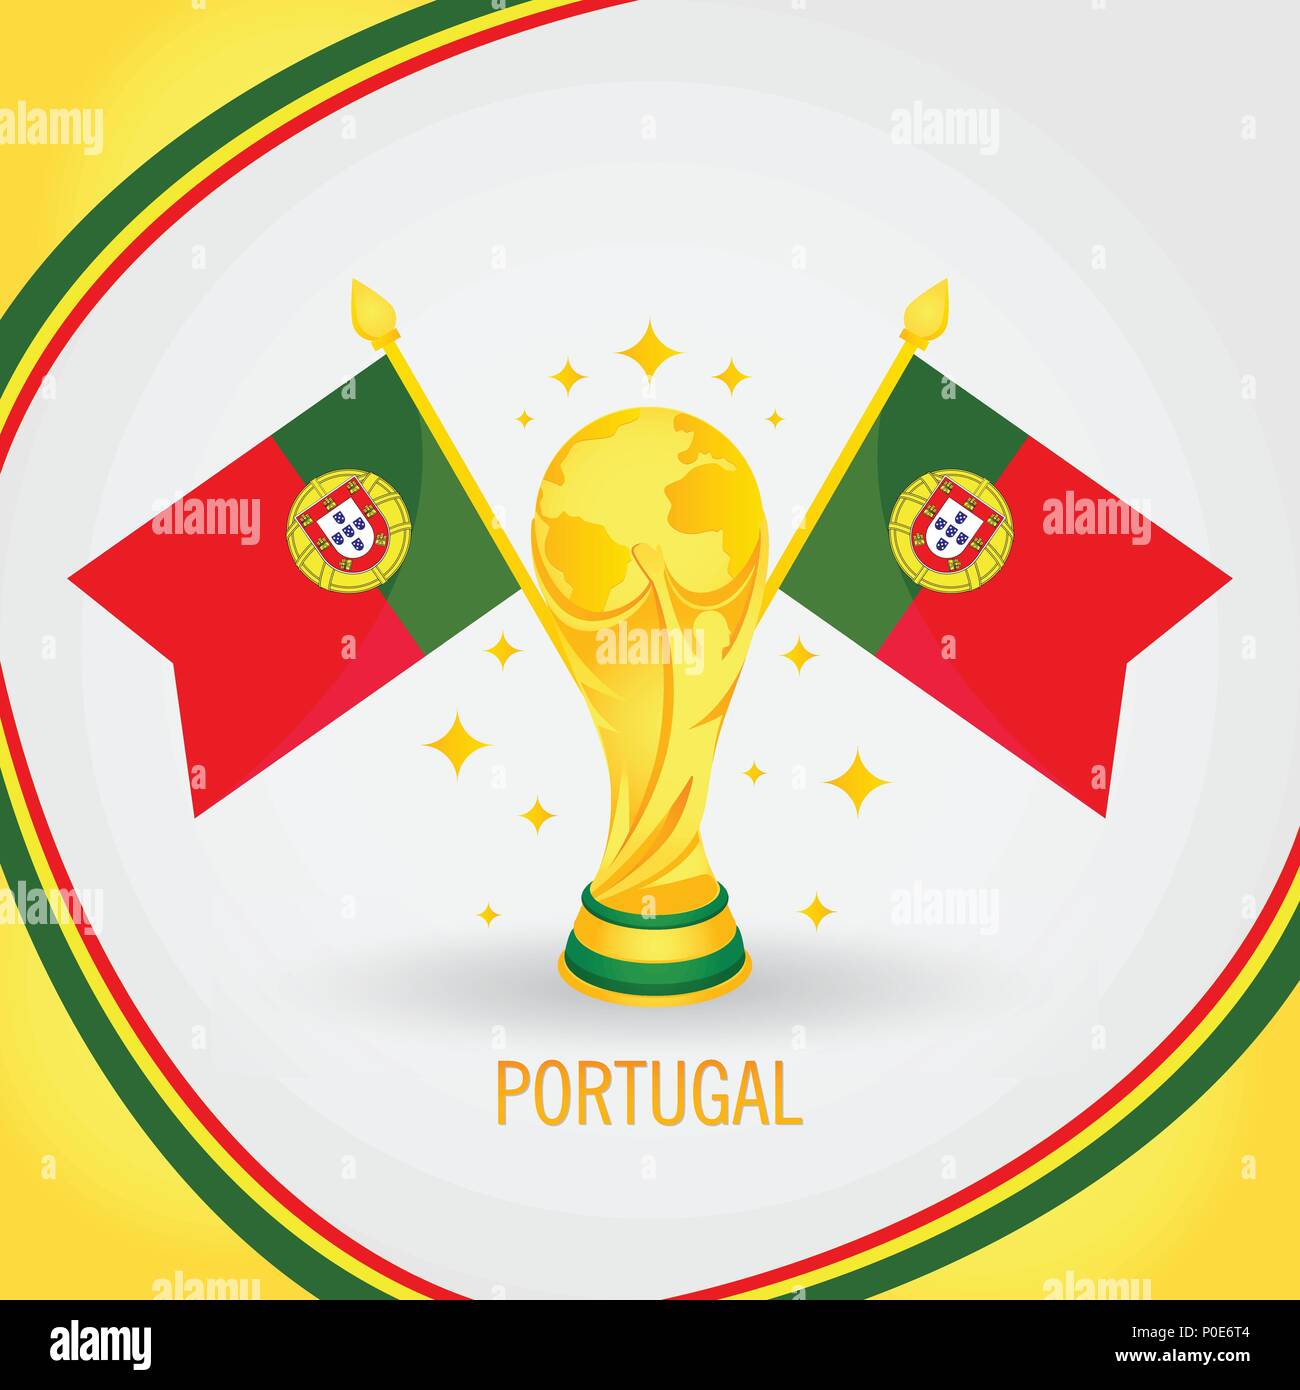 Portugal Fußball-Meister Wm 2018 - Flagge und Goldene Trophäe Stock Vektor